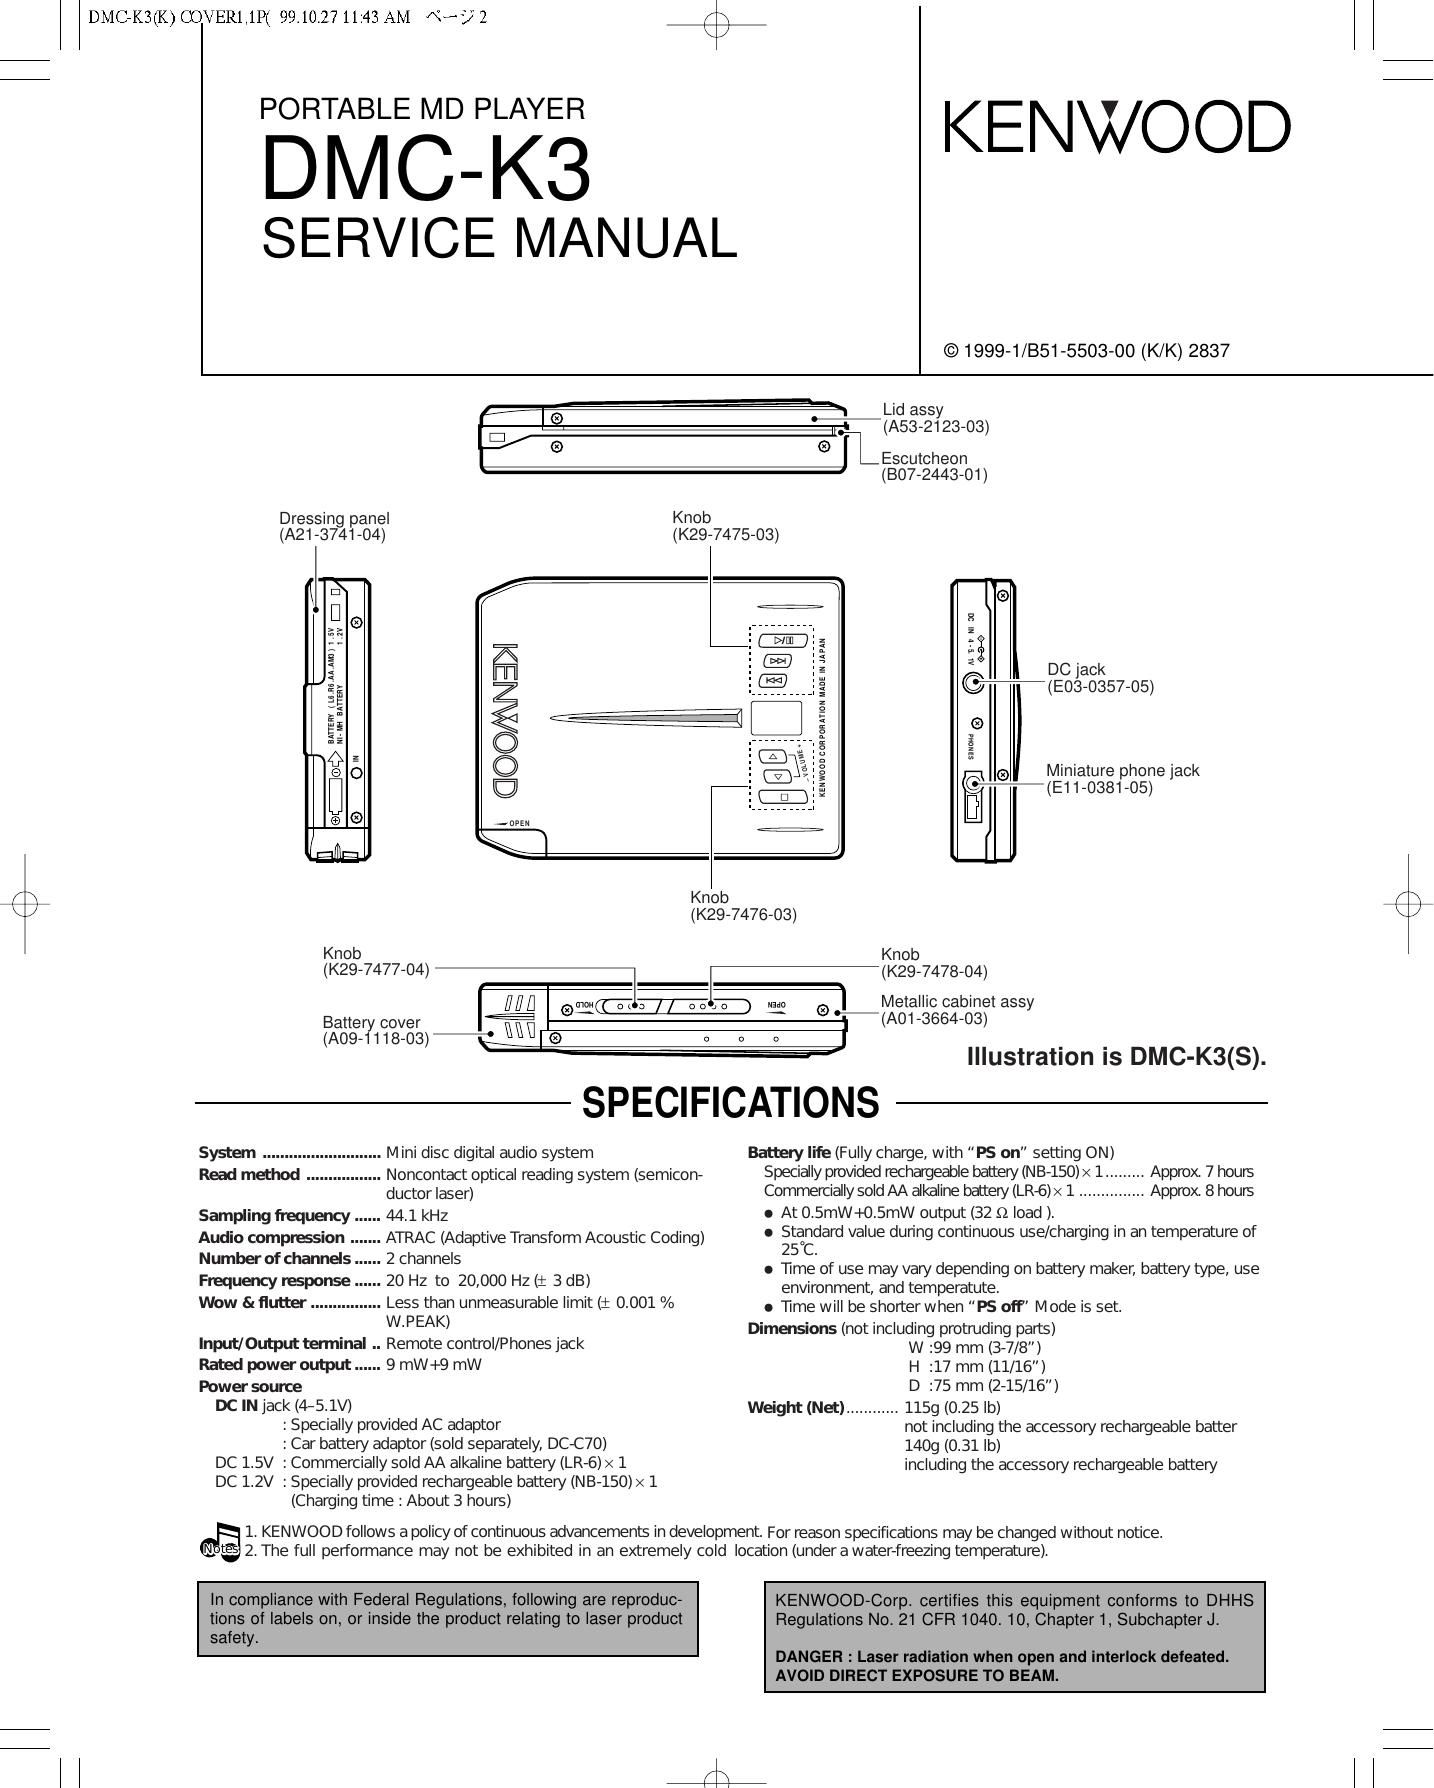 Kenwood DMCK 3 Service Manual